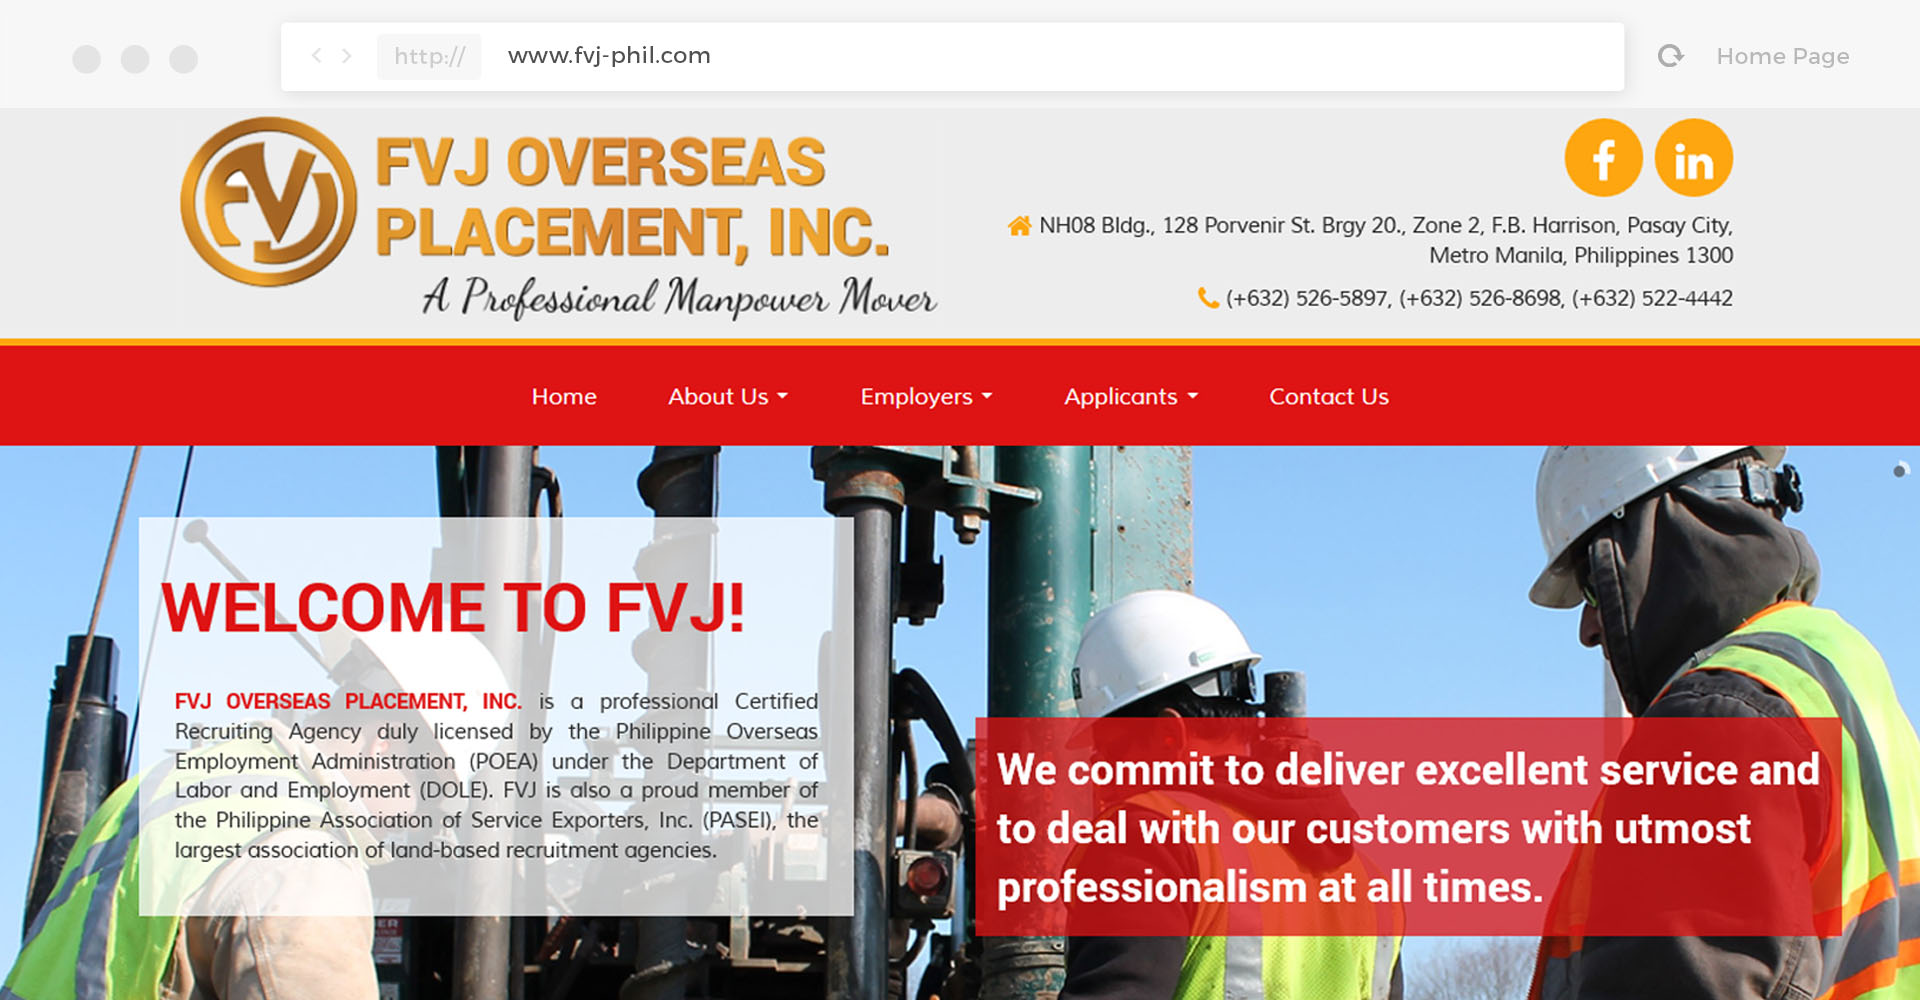 FVJ Overseas Placement Inc.